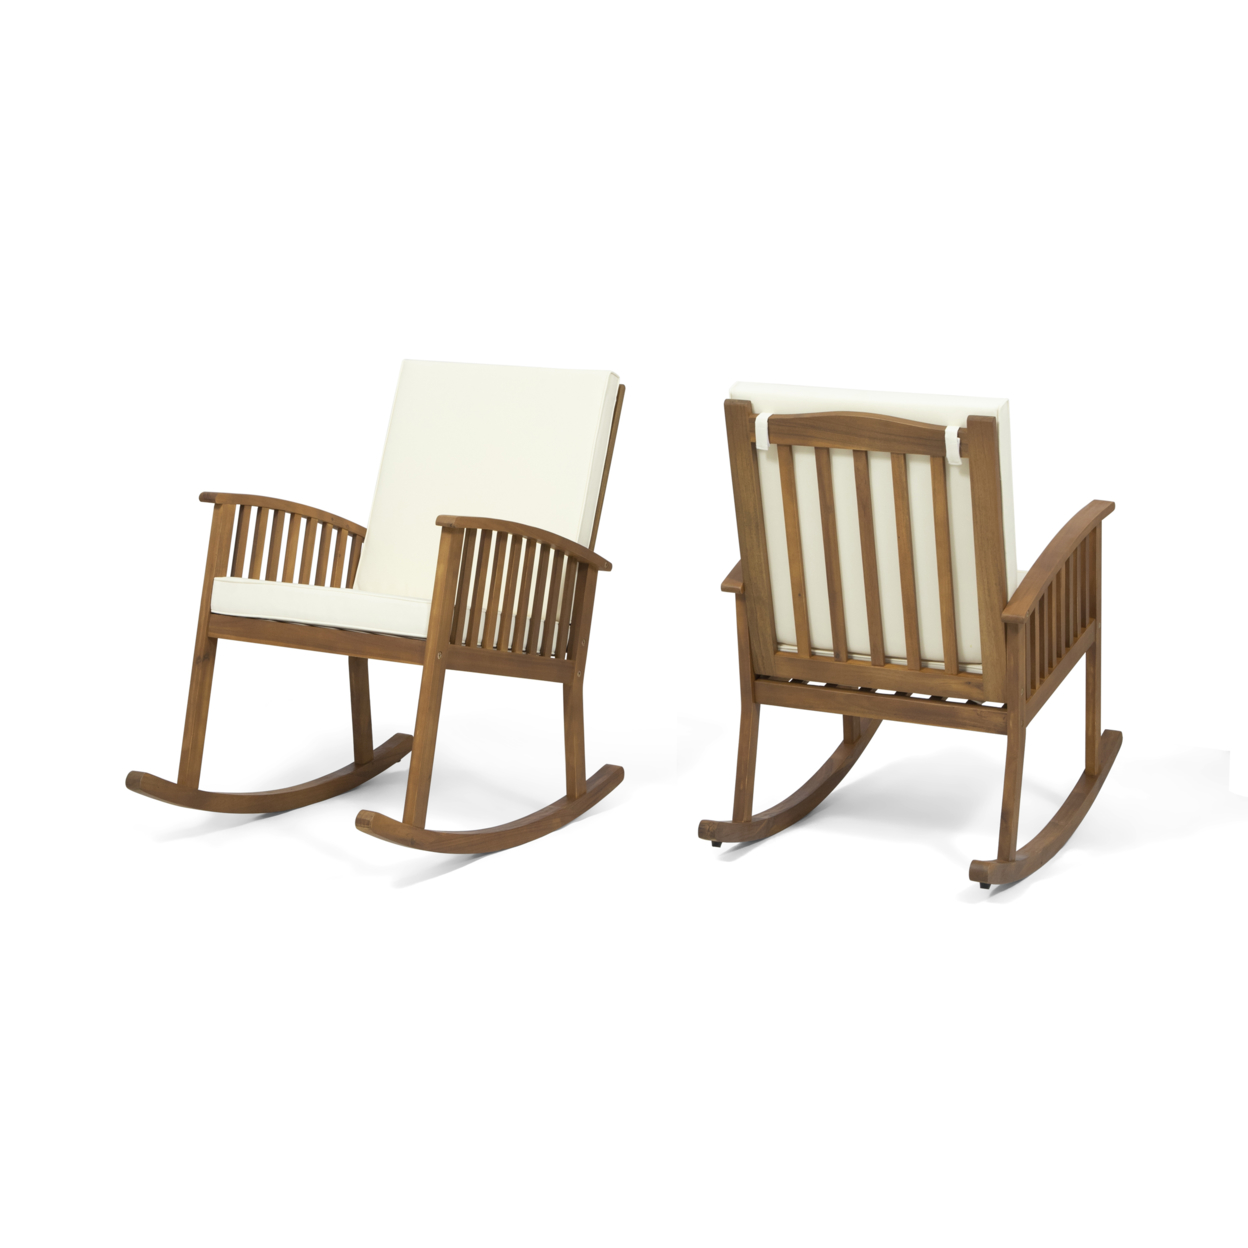 Audrey Outdoor Acacia Wood Rocking Chairs (Set Of 2) - Brown Patina Finish, Cream